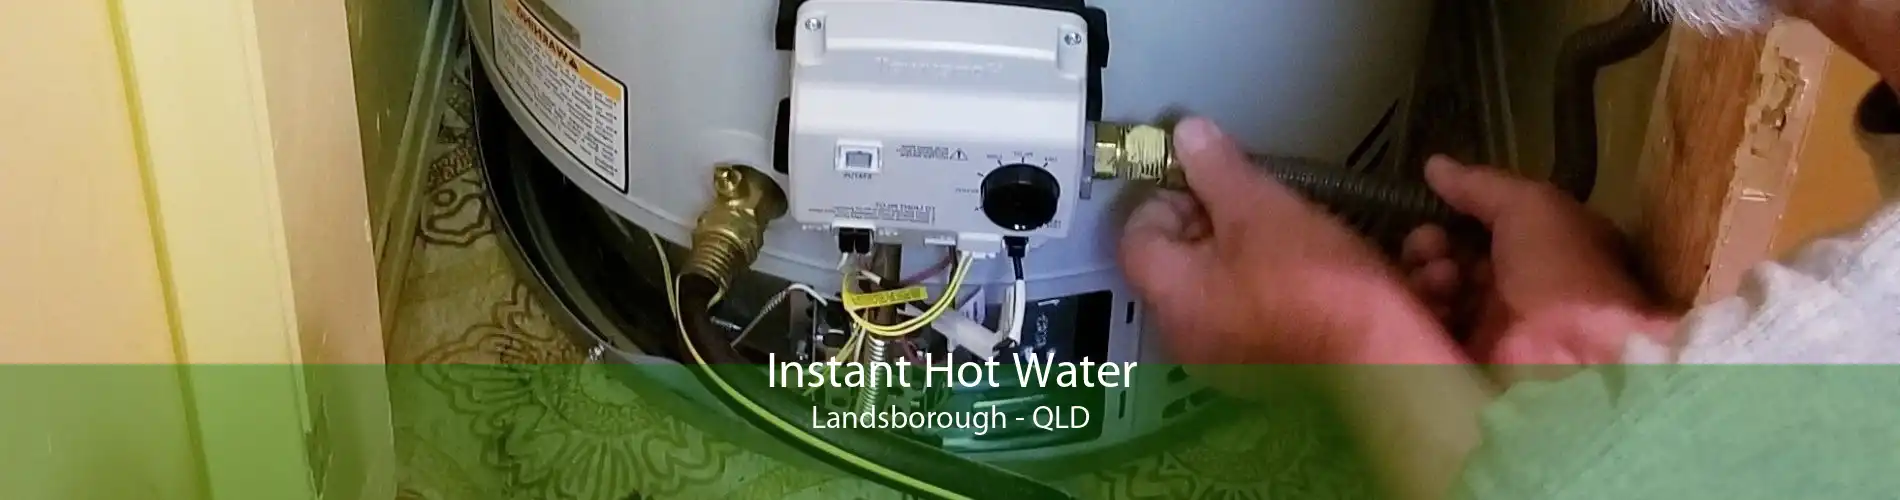 Instant Hot Water Landsborough - QLD